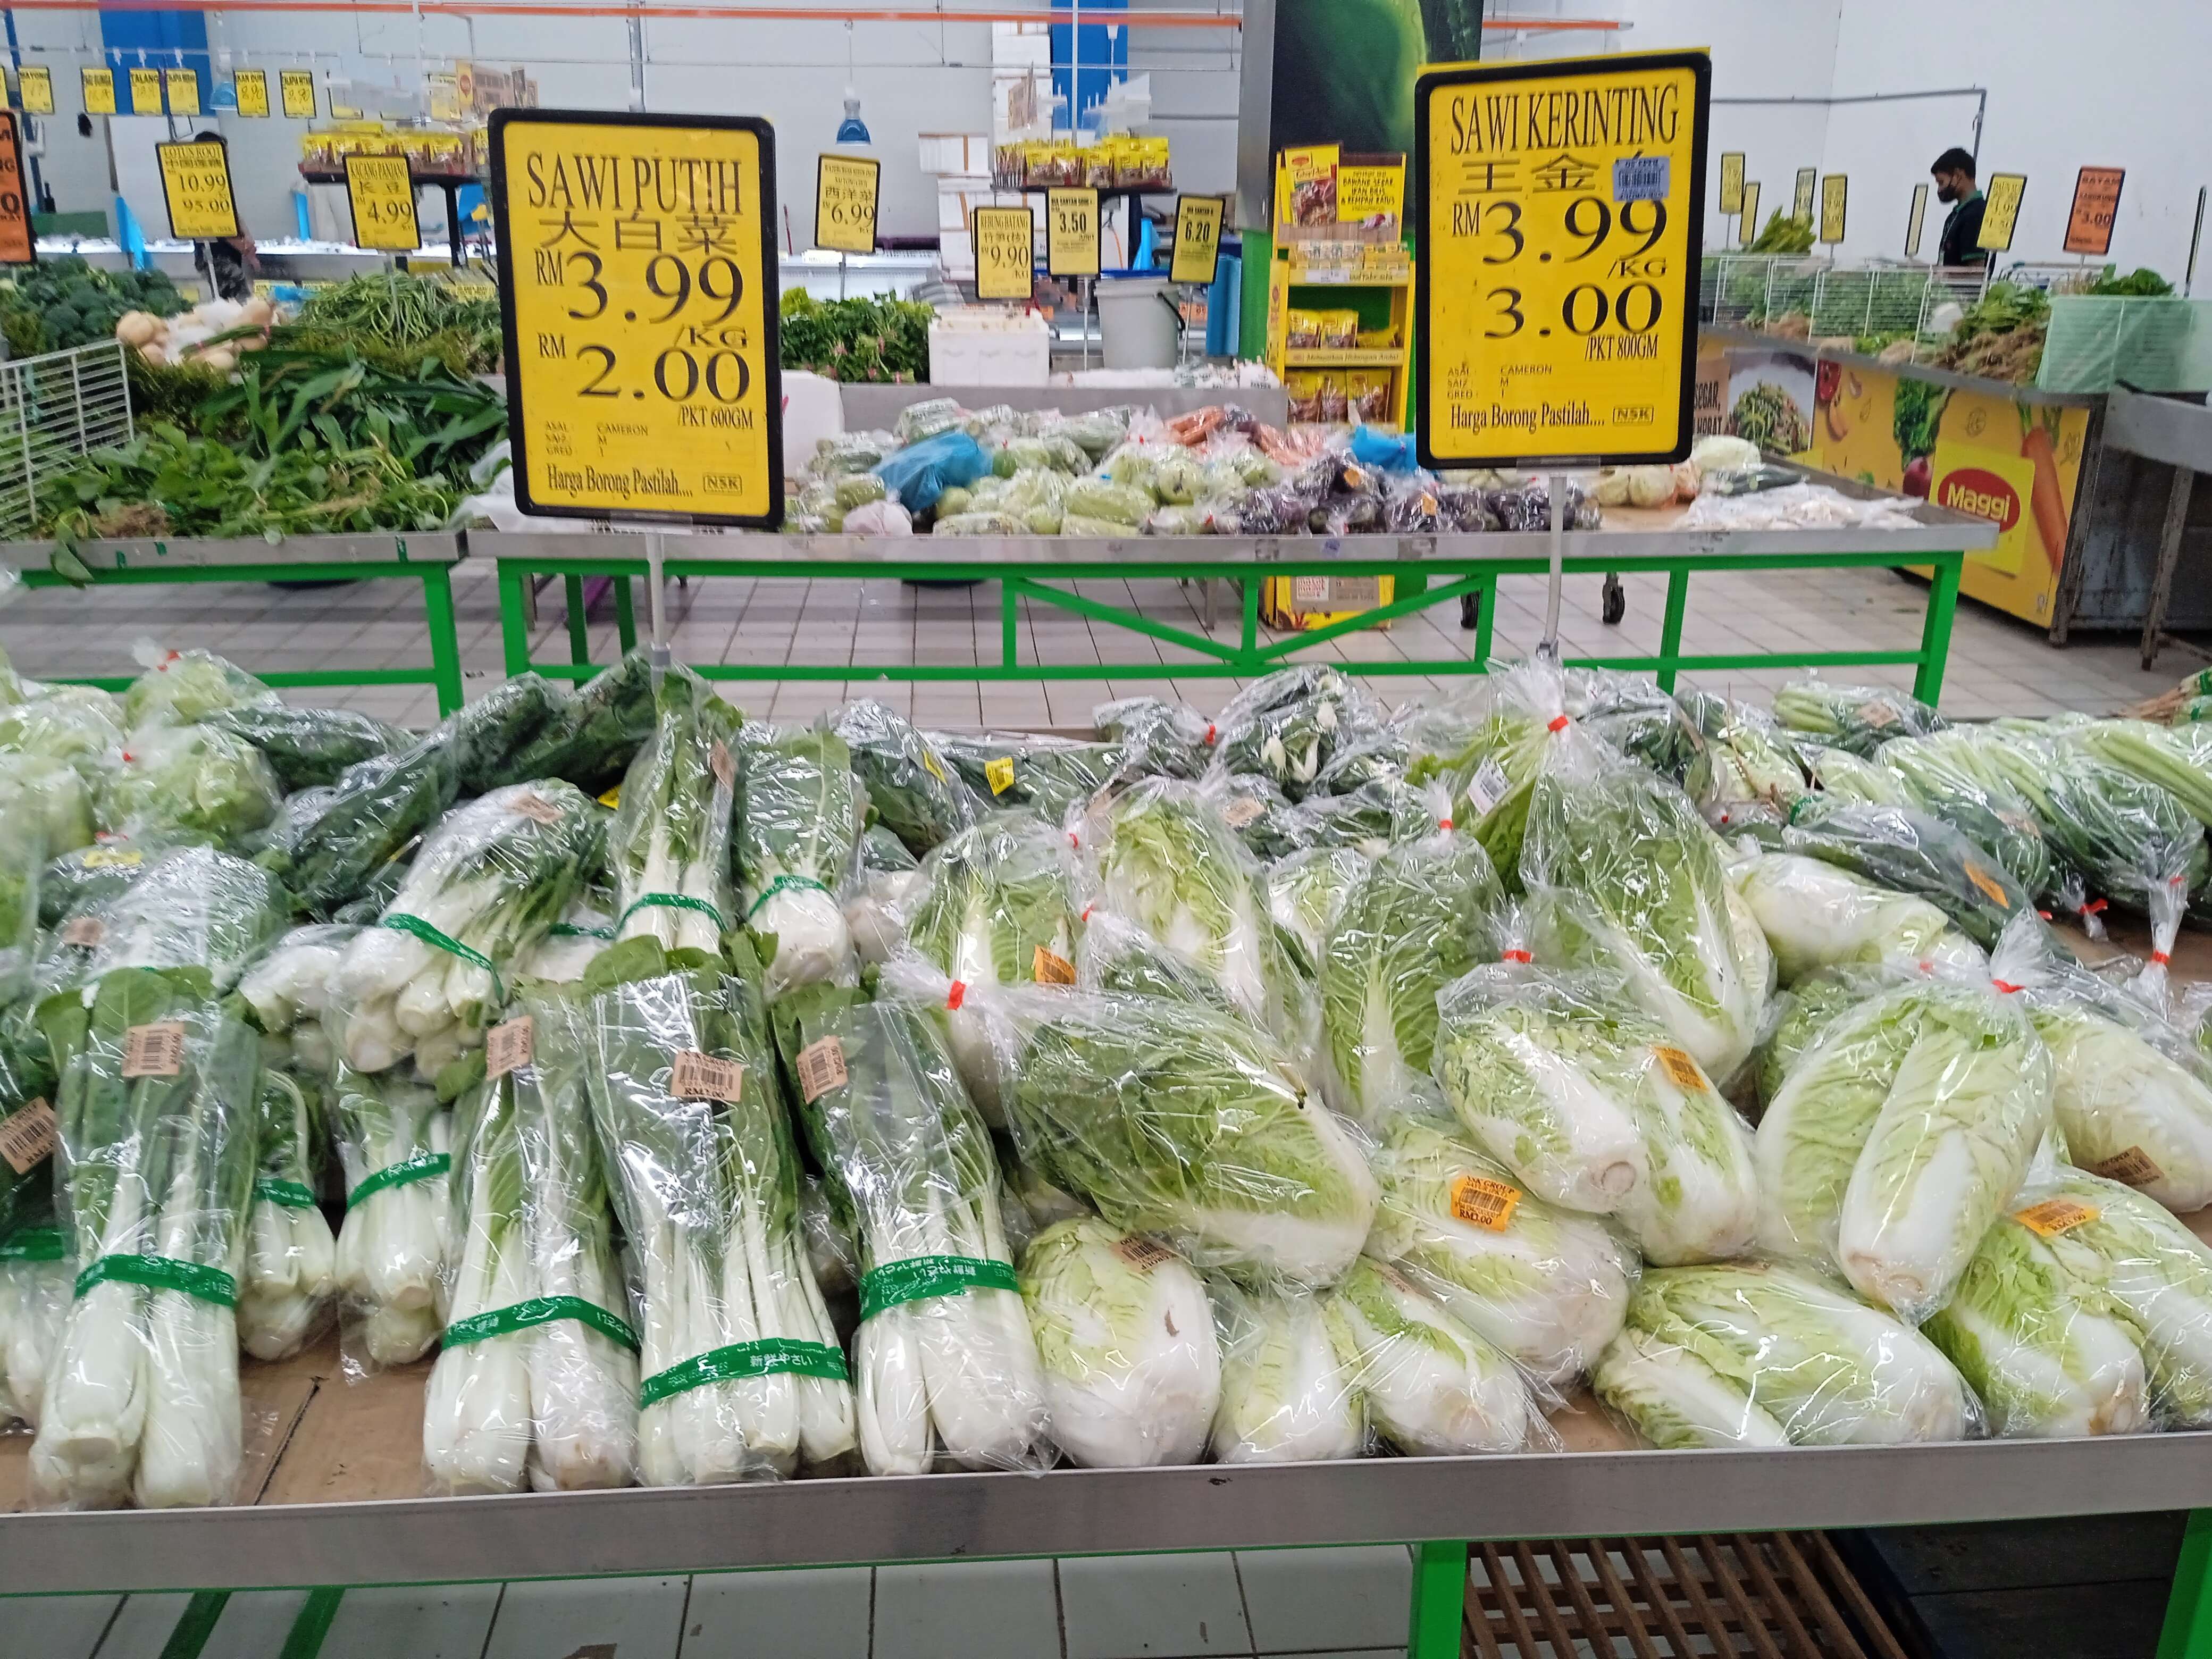 Image of Napa cabbage